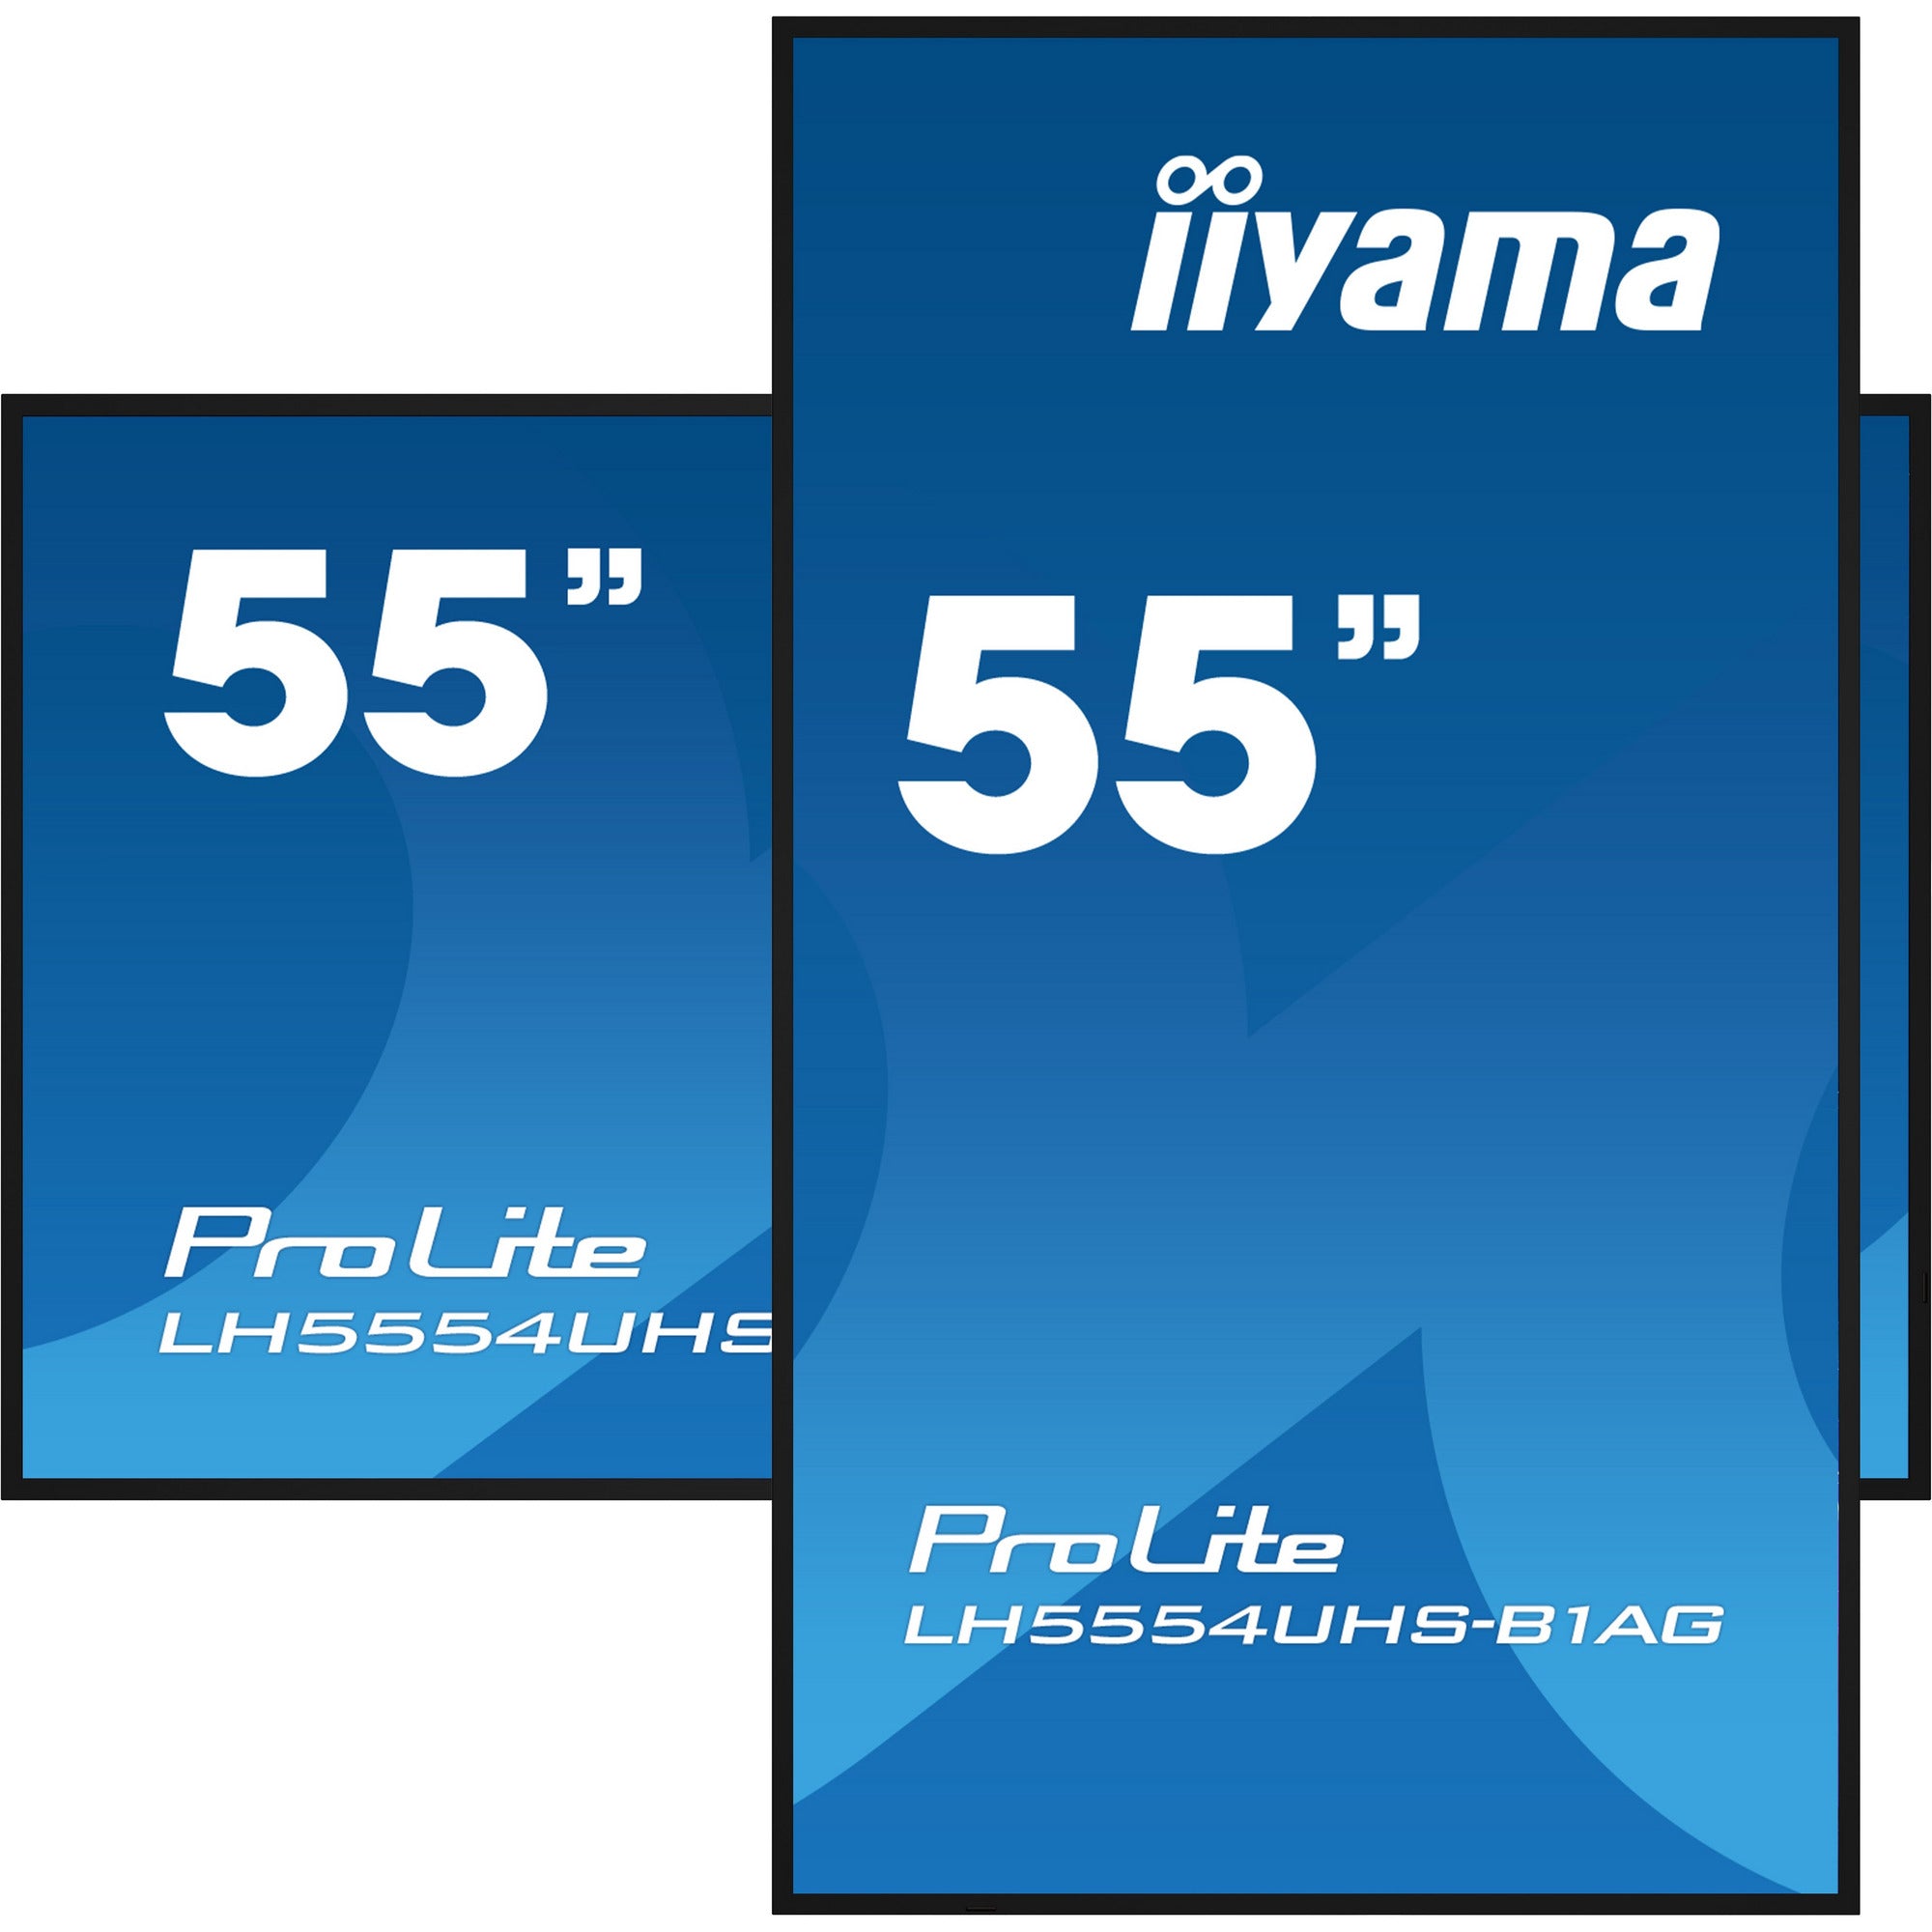 iiyama ProLite LH5554UHS-B1AG 55" 4K UHD Professional Digital Signage 24/7 display with Android OS & FailOver